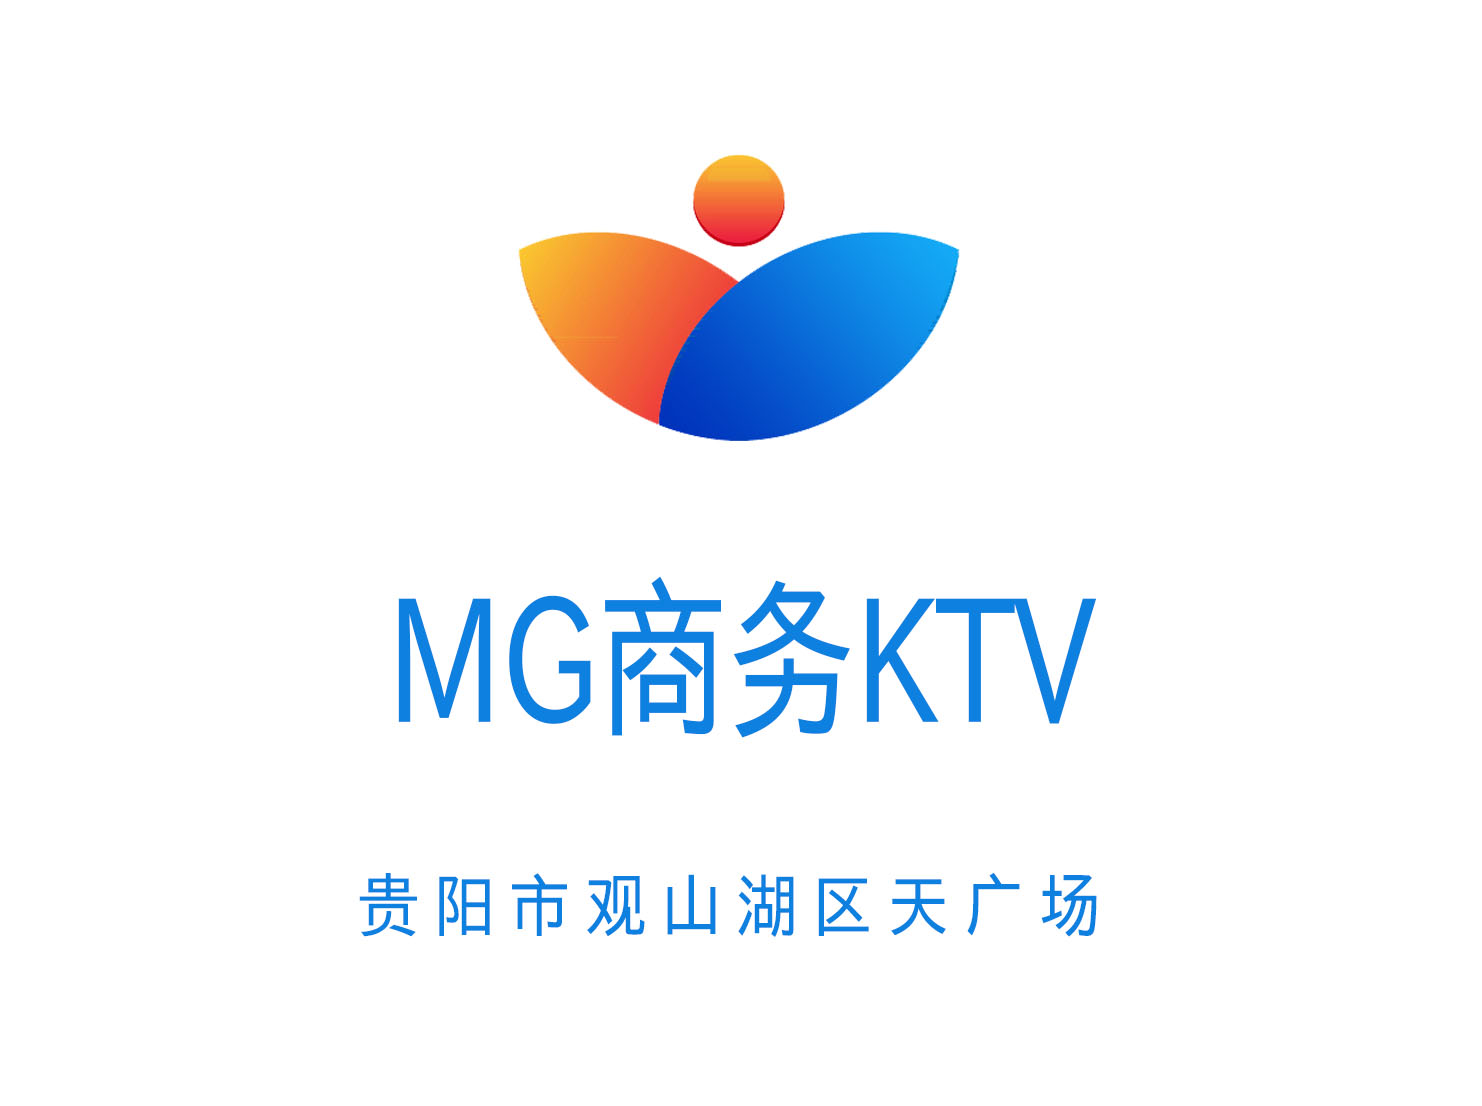 MG商务KTV